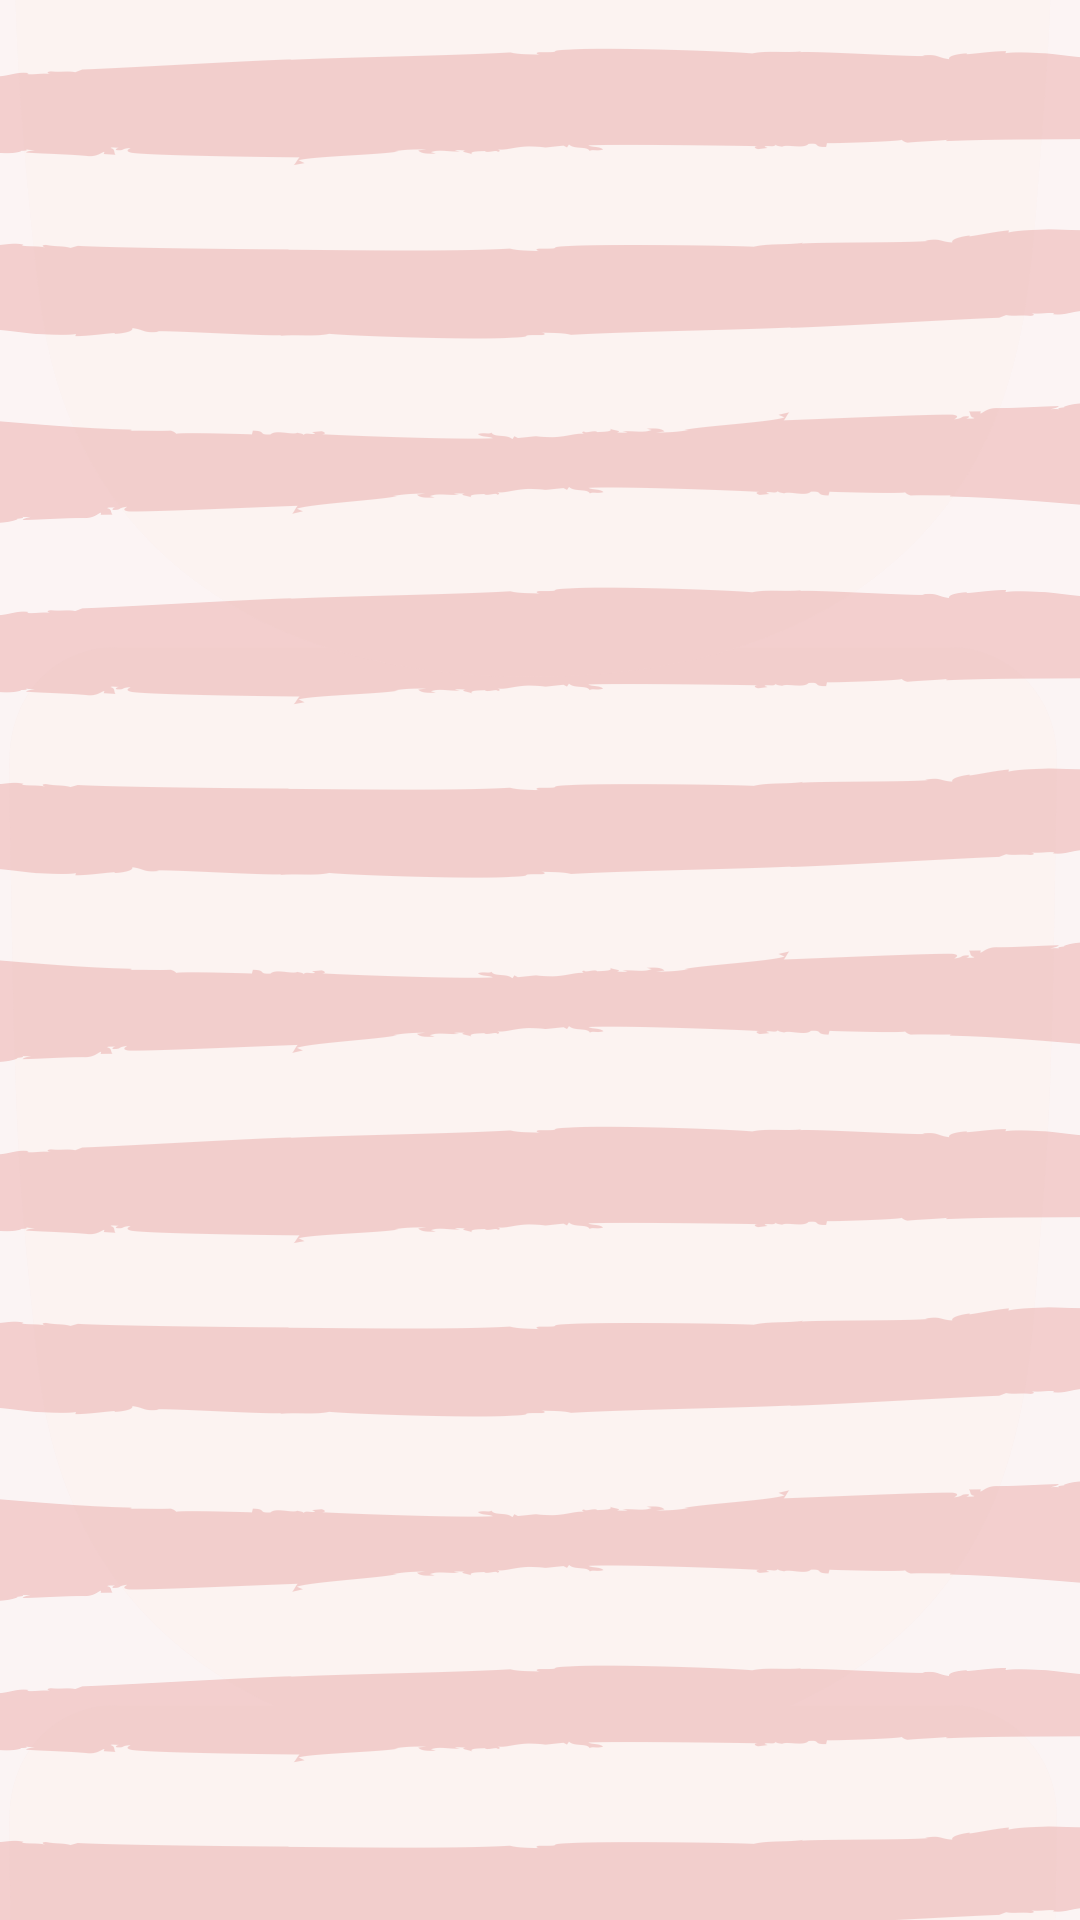 Pink Stripes iPhone Wallpaper. Pink wallpaper iphone, Stripe iphone wallpaper, Spring wallpaper